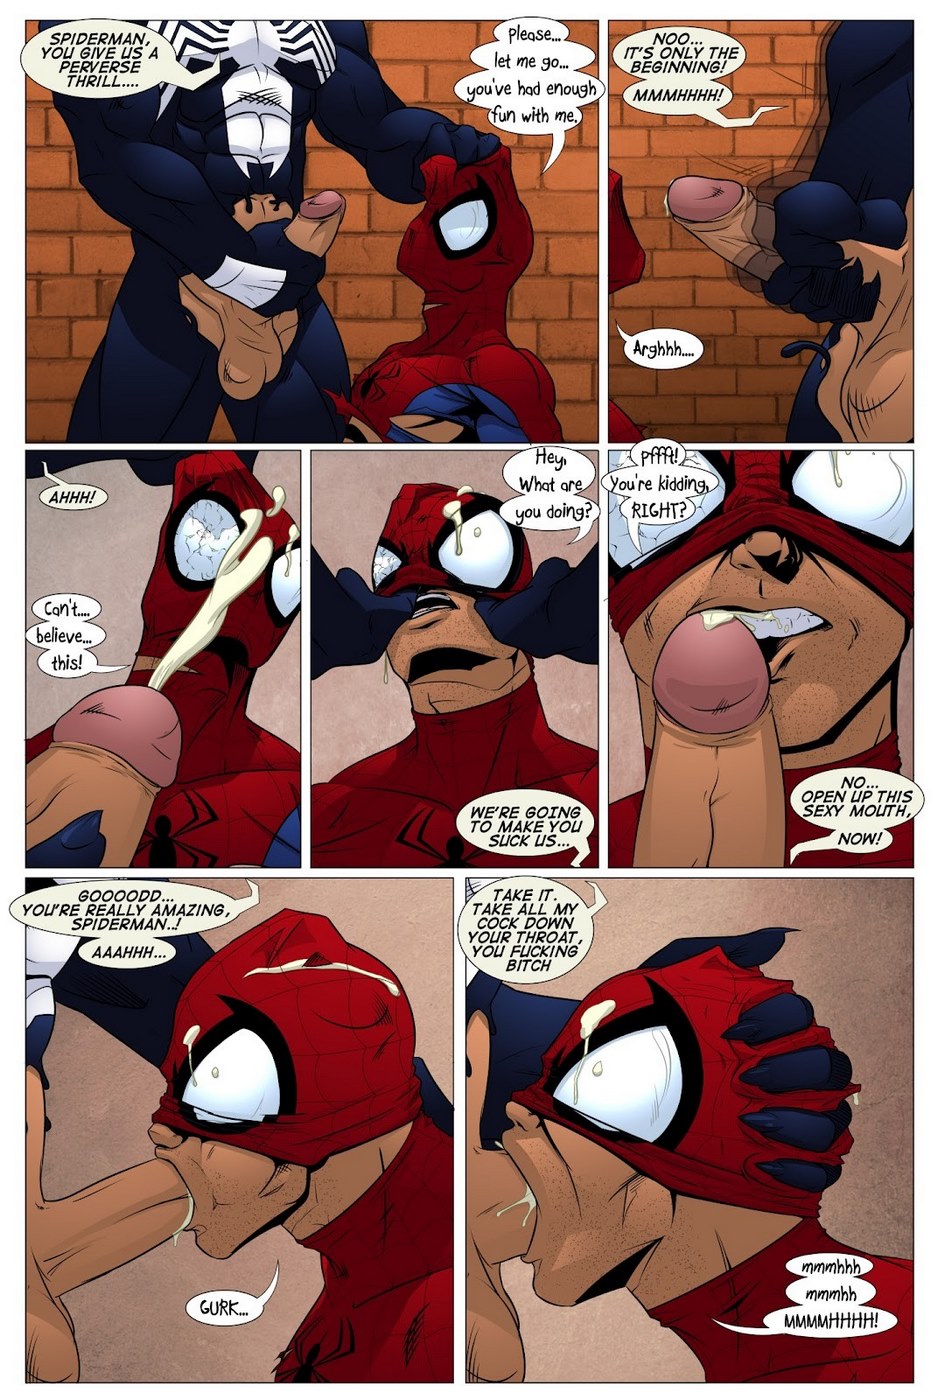 spiderman gay sex comic